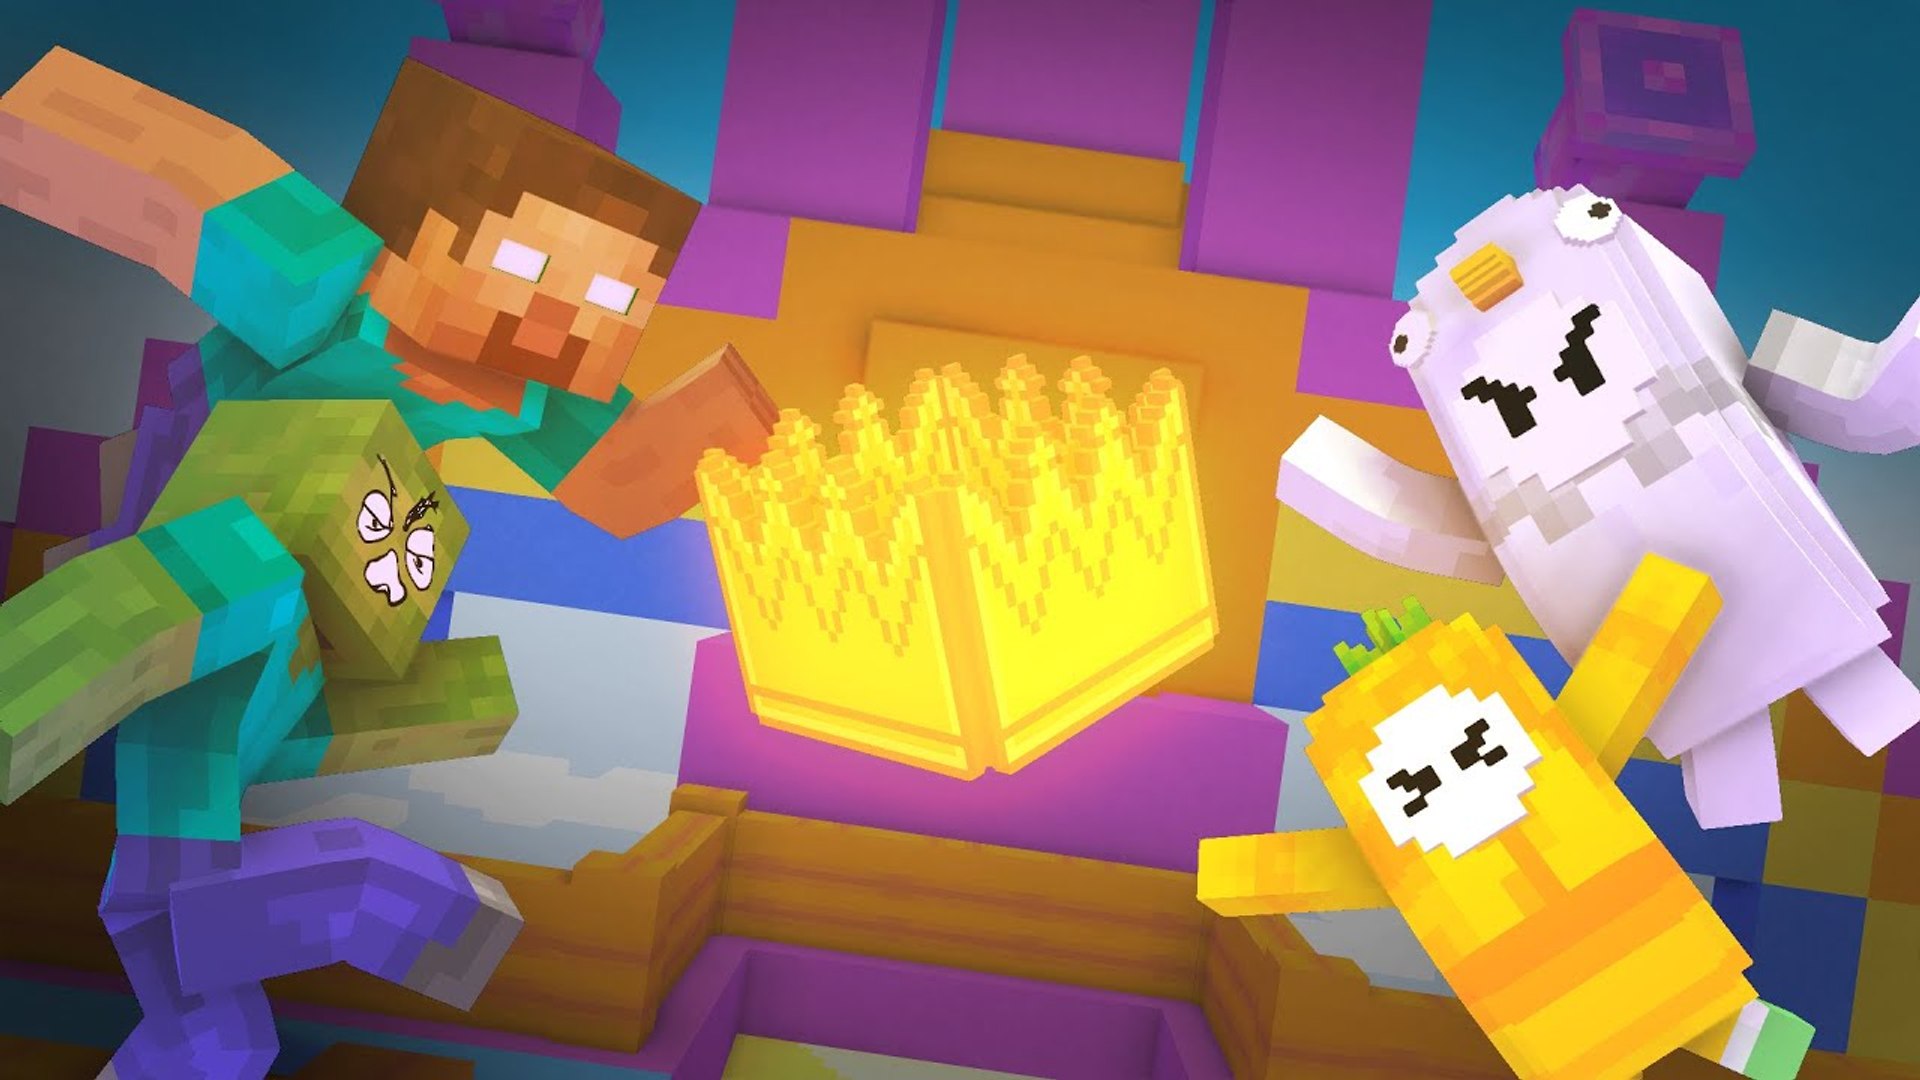 Ghost blocks. Fall guys майнкрафт. Канал Макса - Monster School Minecraft. Boxy Boo Minecraft. Monster School among us Challenge Minecraft animation.